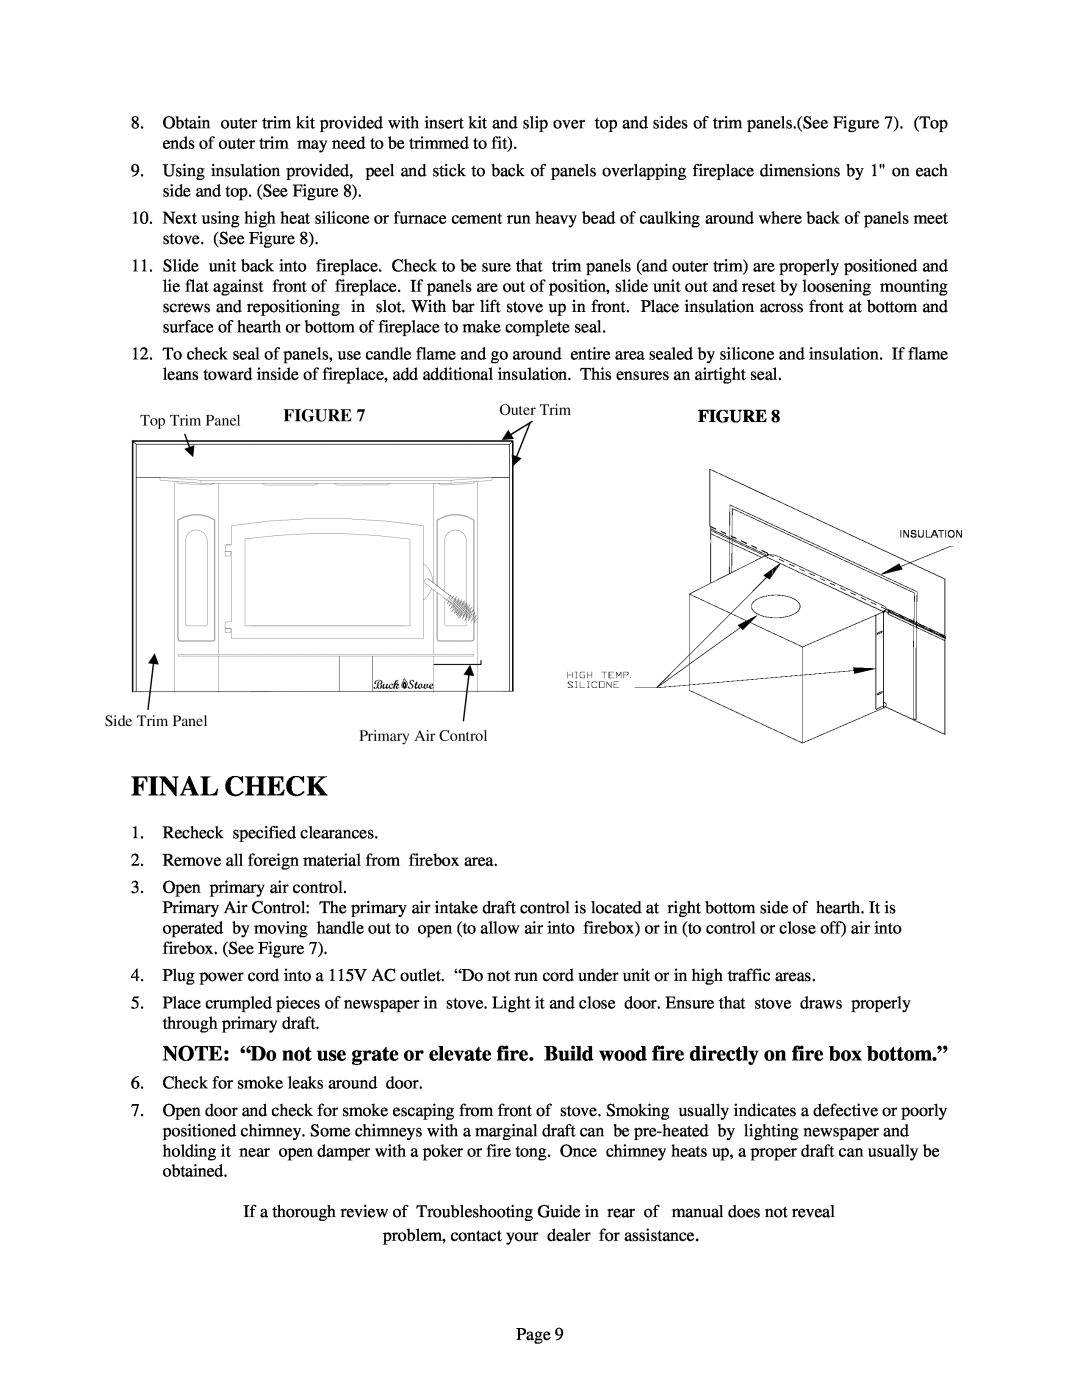 New Buck Corporation 94NC installation instructions Final Check 